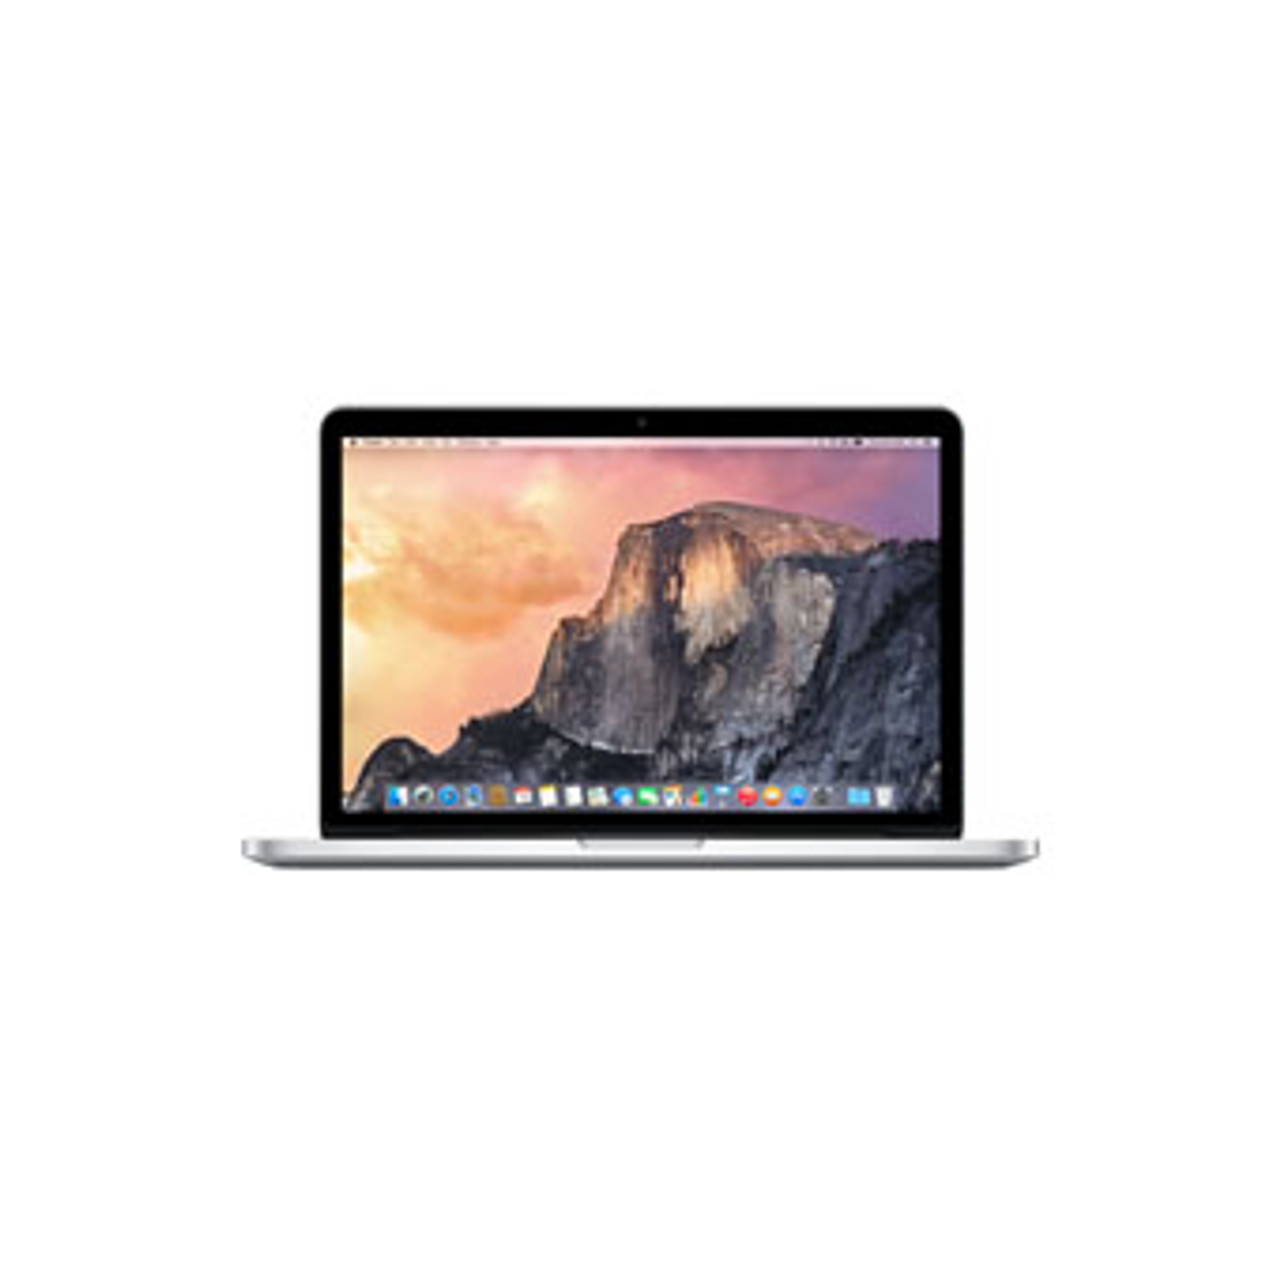 Apple MacBook Pro Retina 15-inch 2.5GHz Quad-core i7 (Mid 2015)